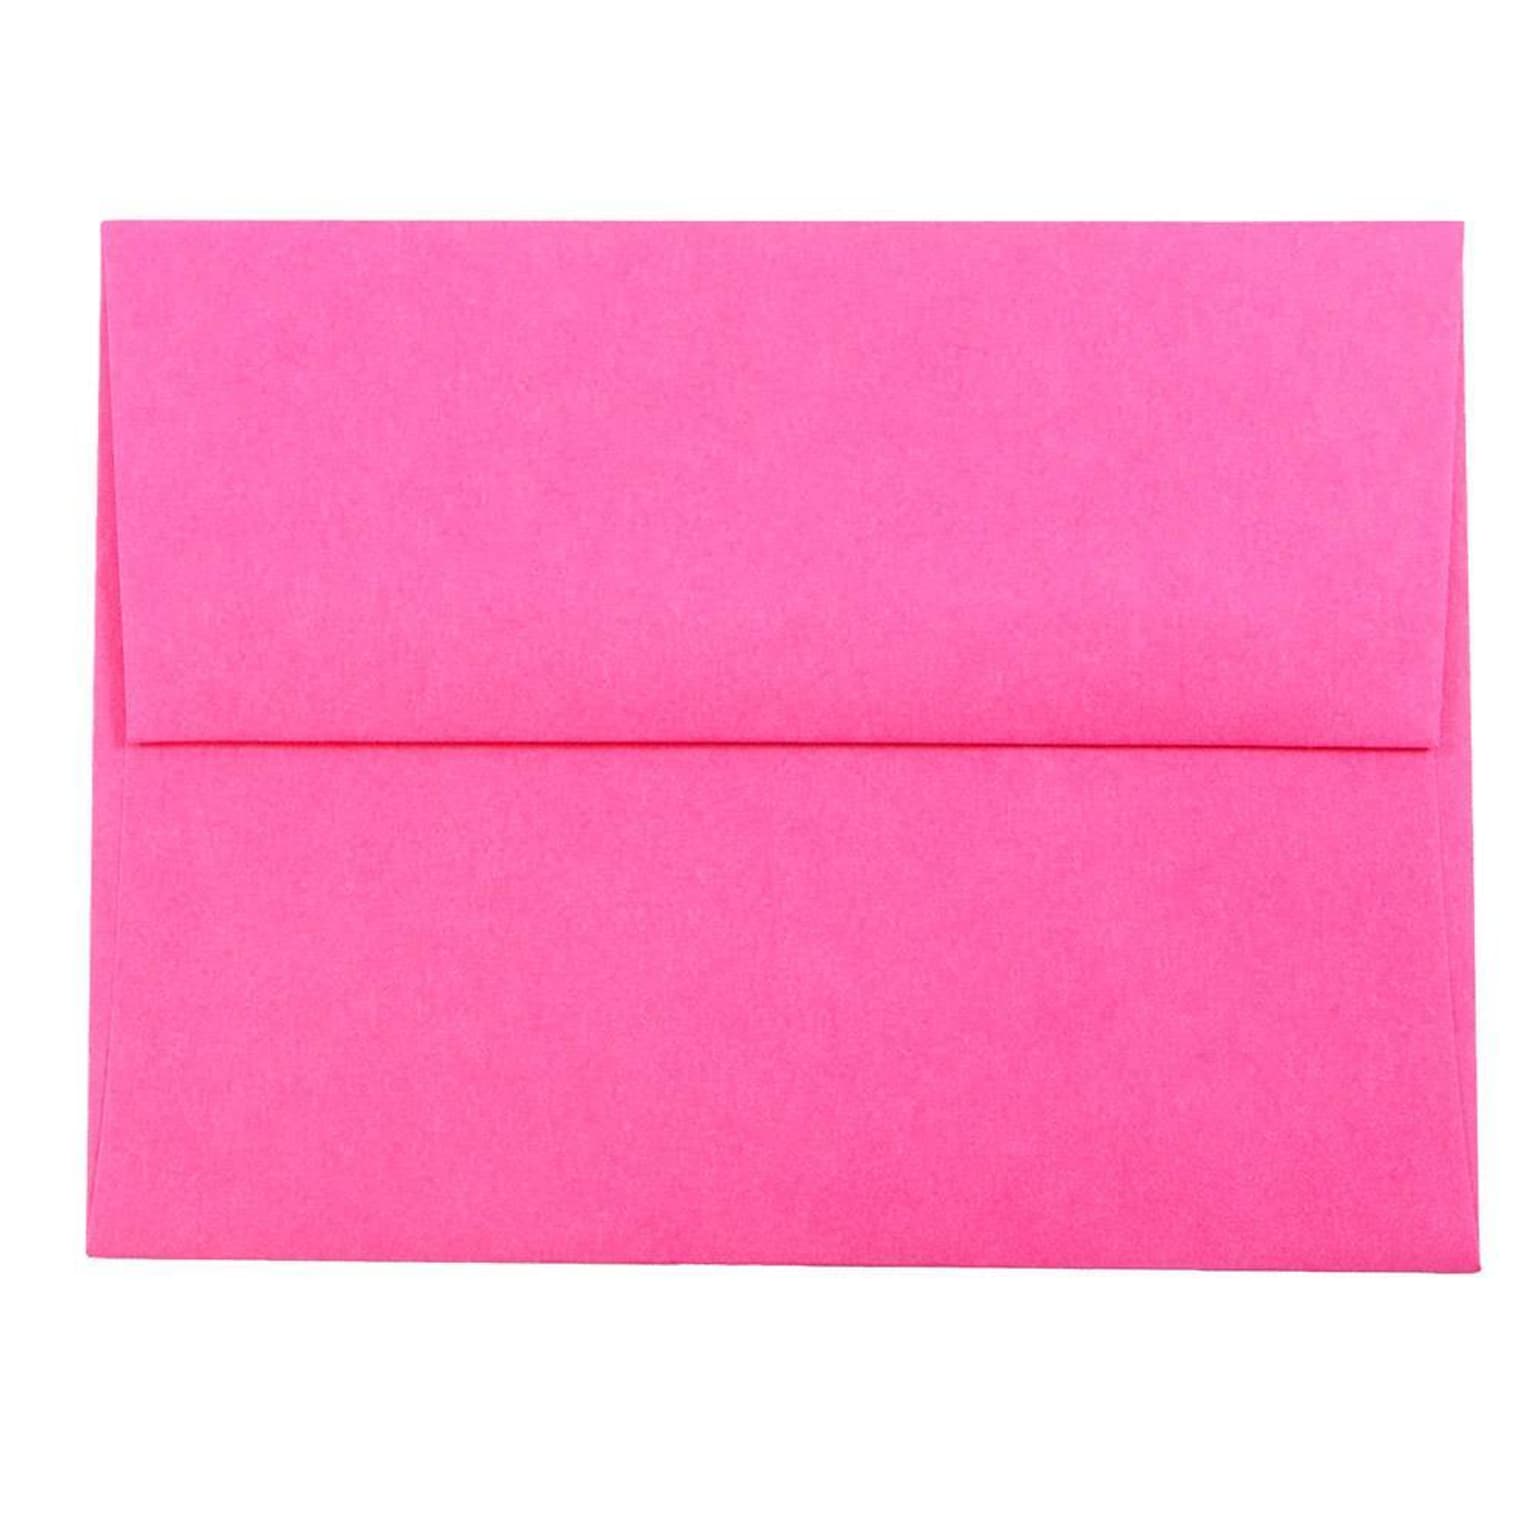 JAM Paper A2 Colored Invitation Envelopes, 4.375 x 5.75, Ultra Fuchsia Pink, 50/Pack (12844I)